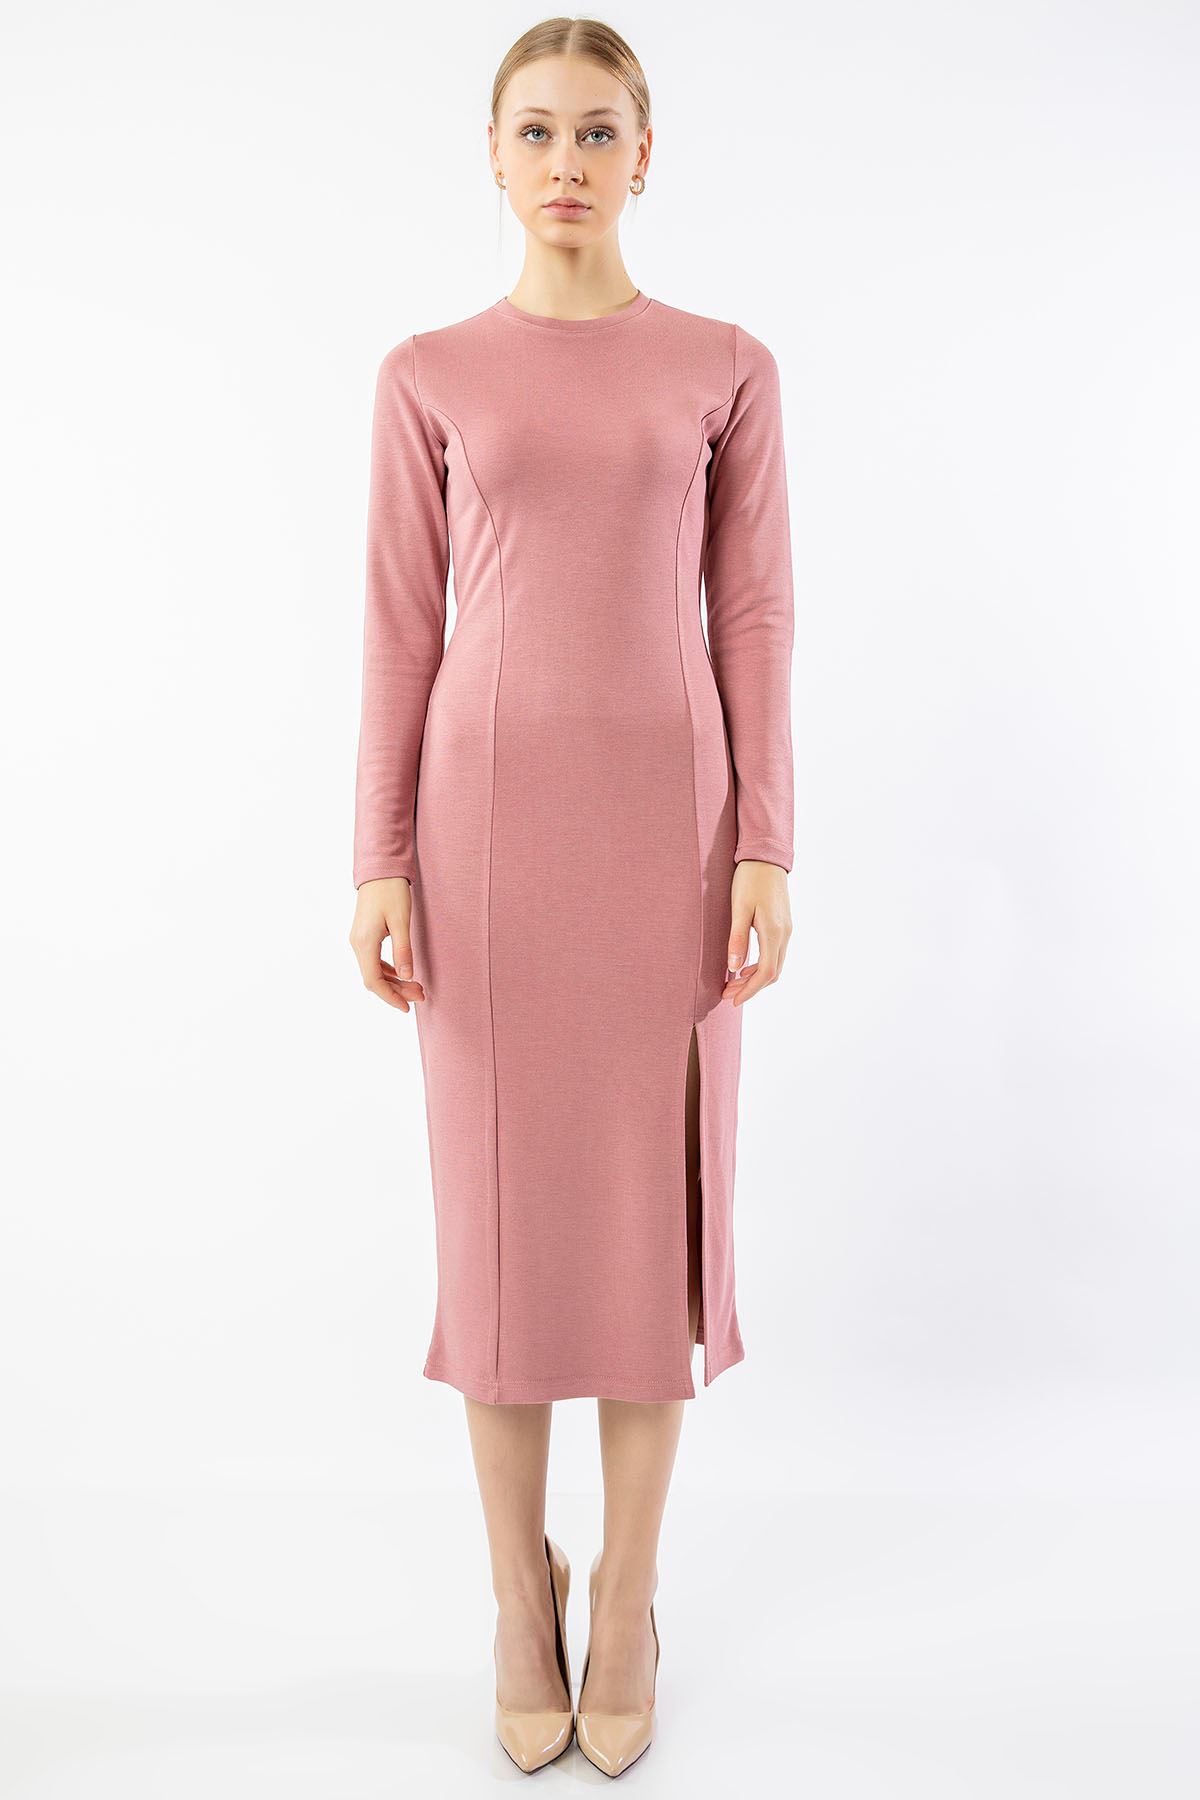 Knit Fabric Long Sleeve Bicycle Collar Tight Fit Slit Mini Women Dress - Rose 